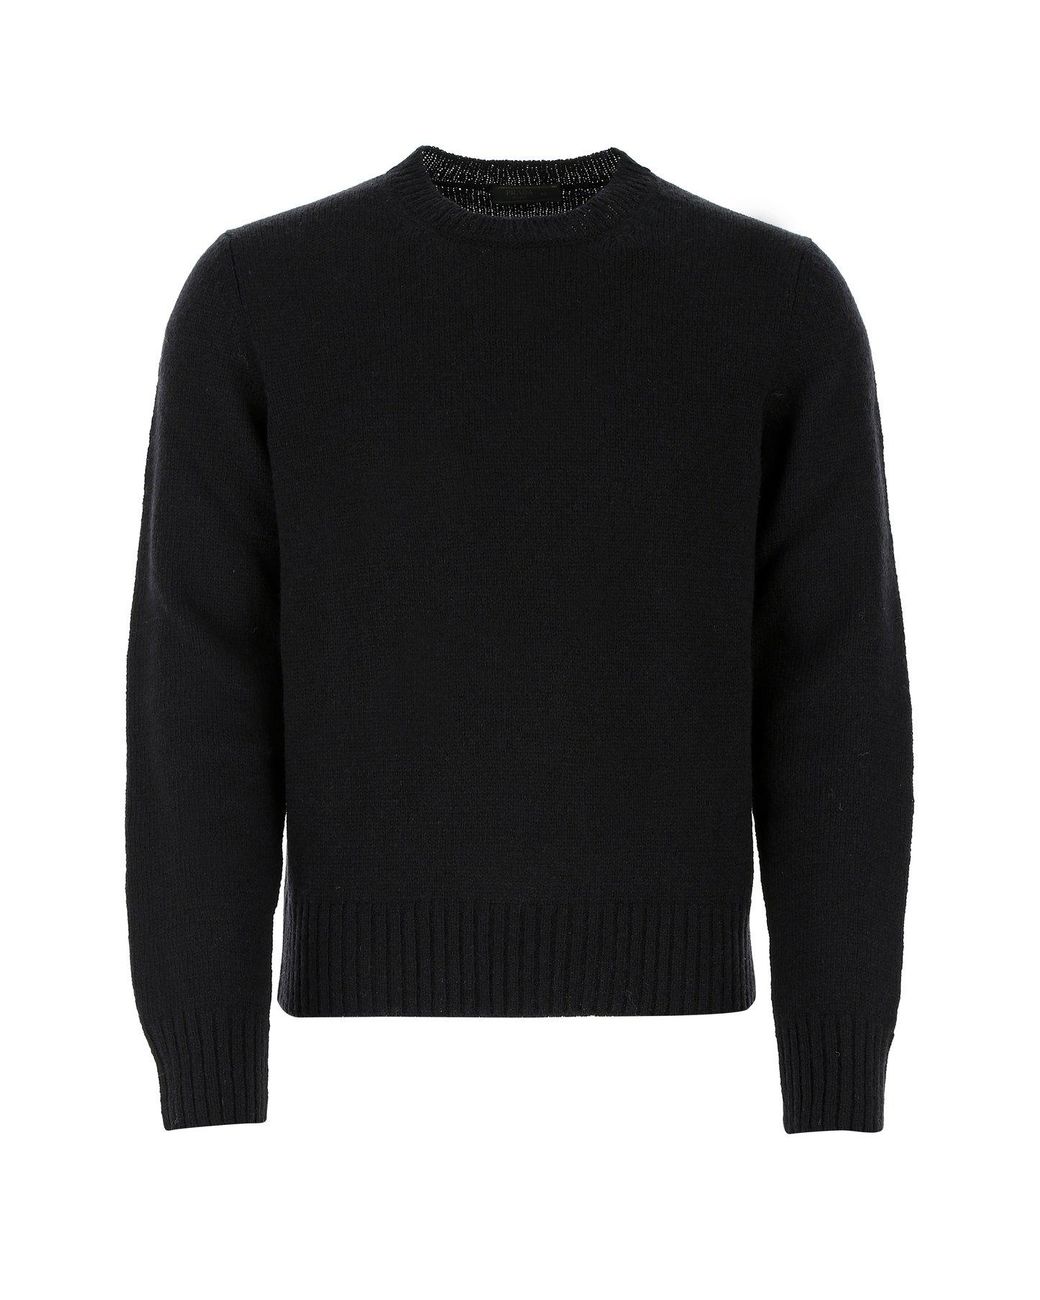 Prada Wool Crewneck Knitted Sweater in Black for Men - Lyst